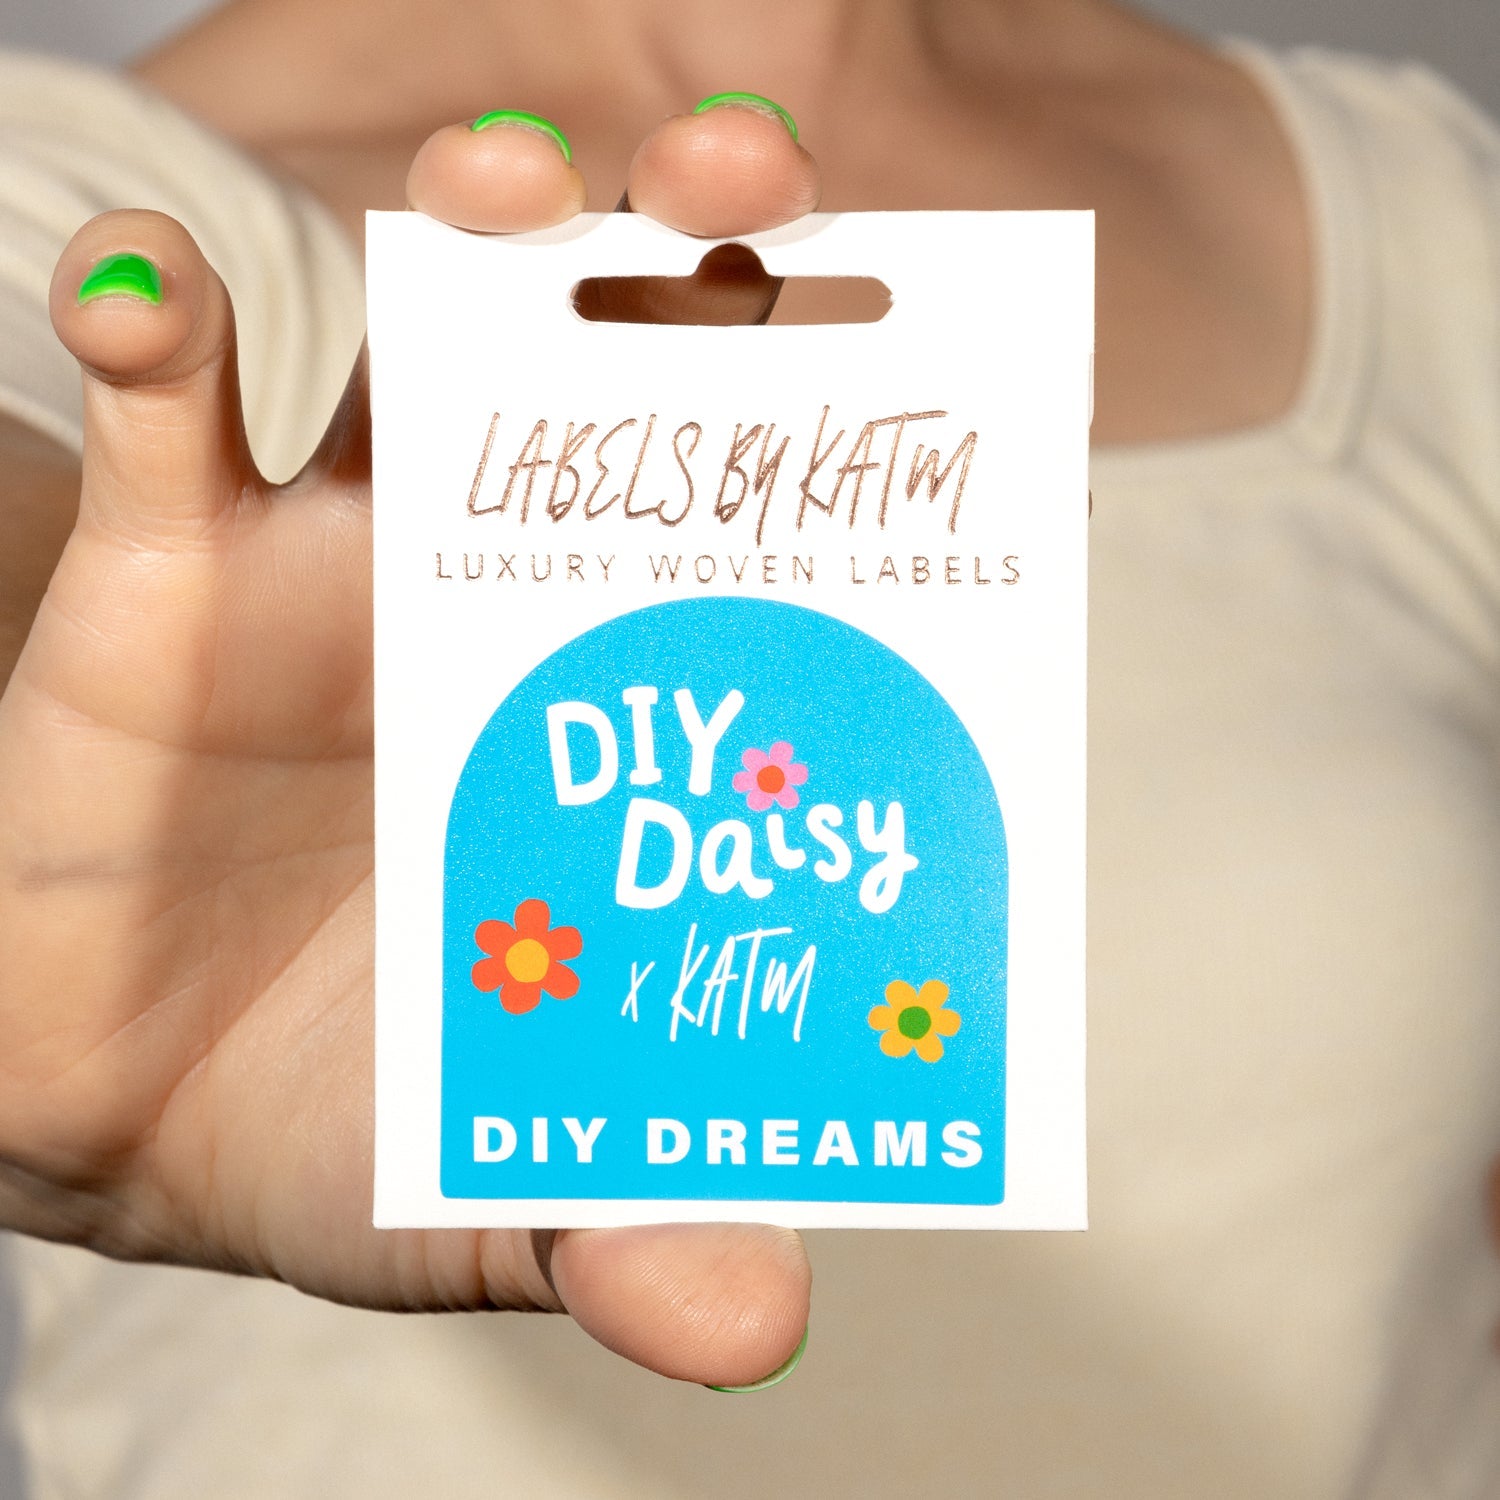 &#39;DIY Dreams&#39; labels by DIY Daisy x KATM - 10 woven labels per pack